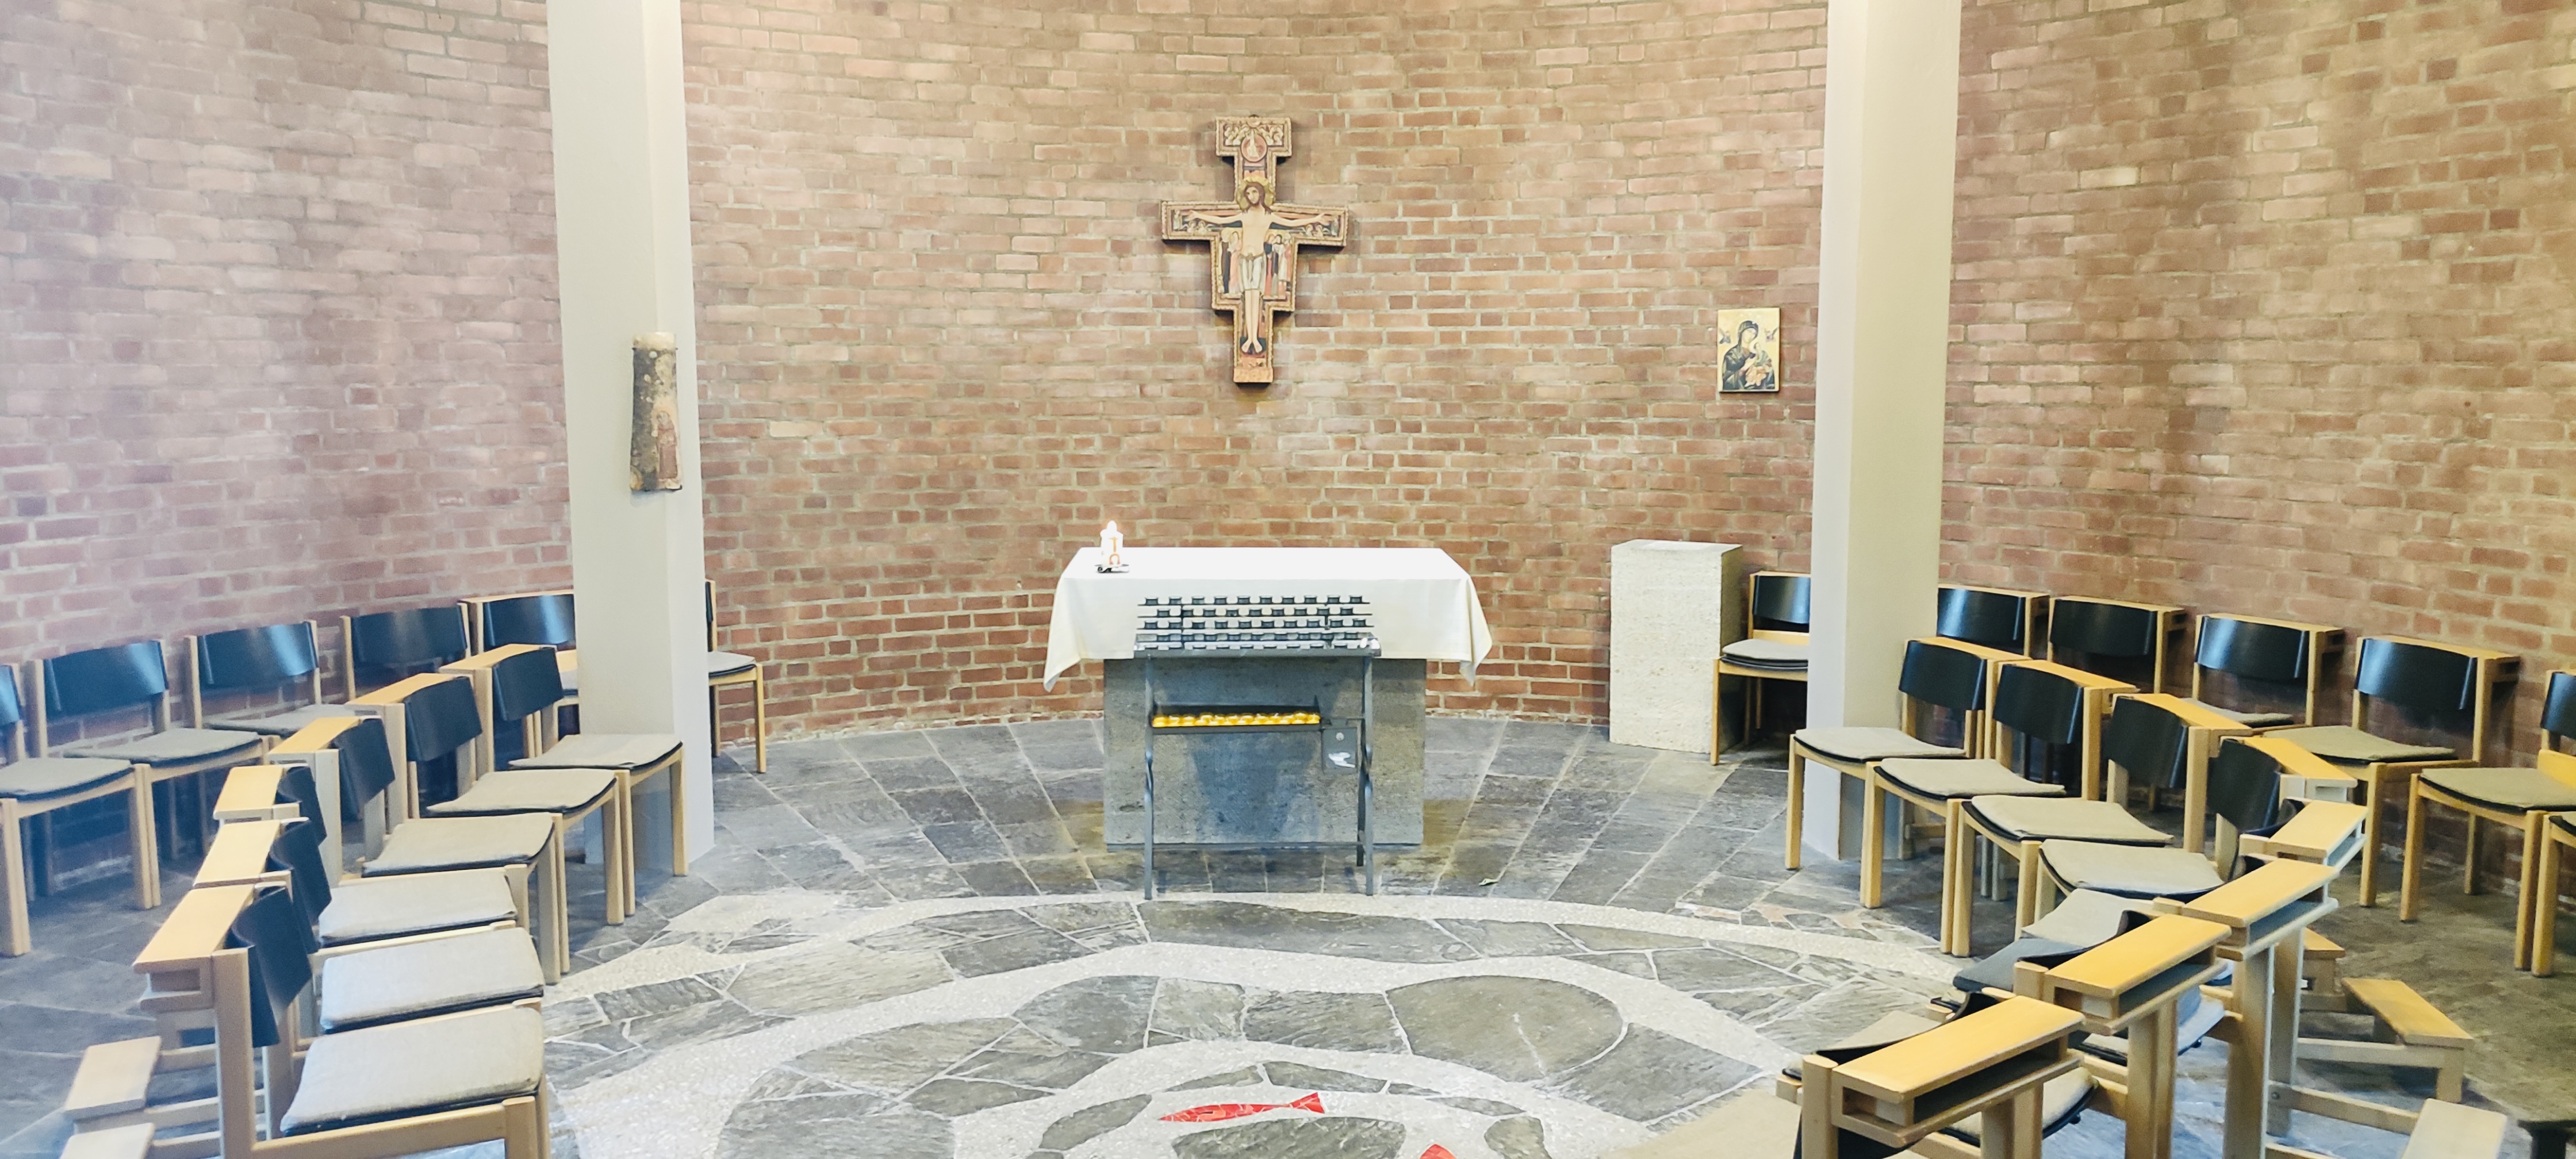 St. Franziskus Taufkapelle